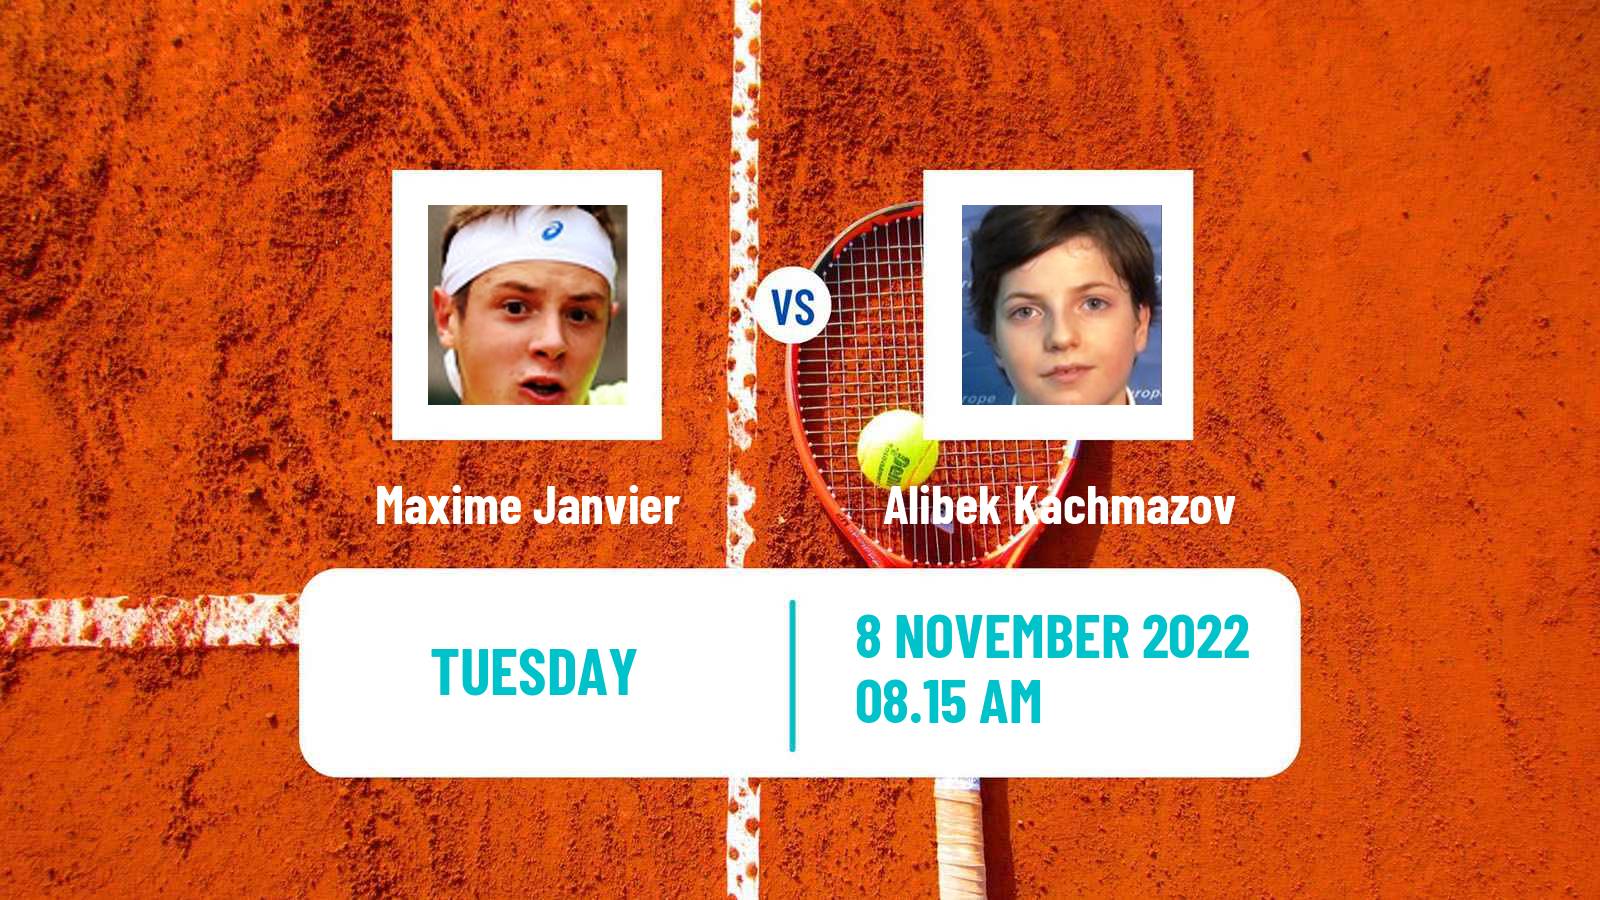 Tennis ATP Challenger Maxime Janvier - Alibek Kachmazov